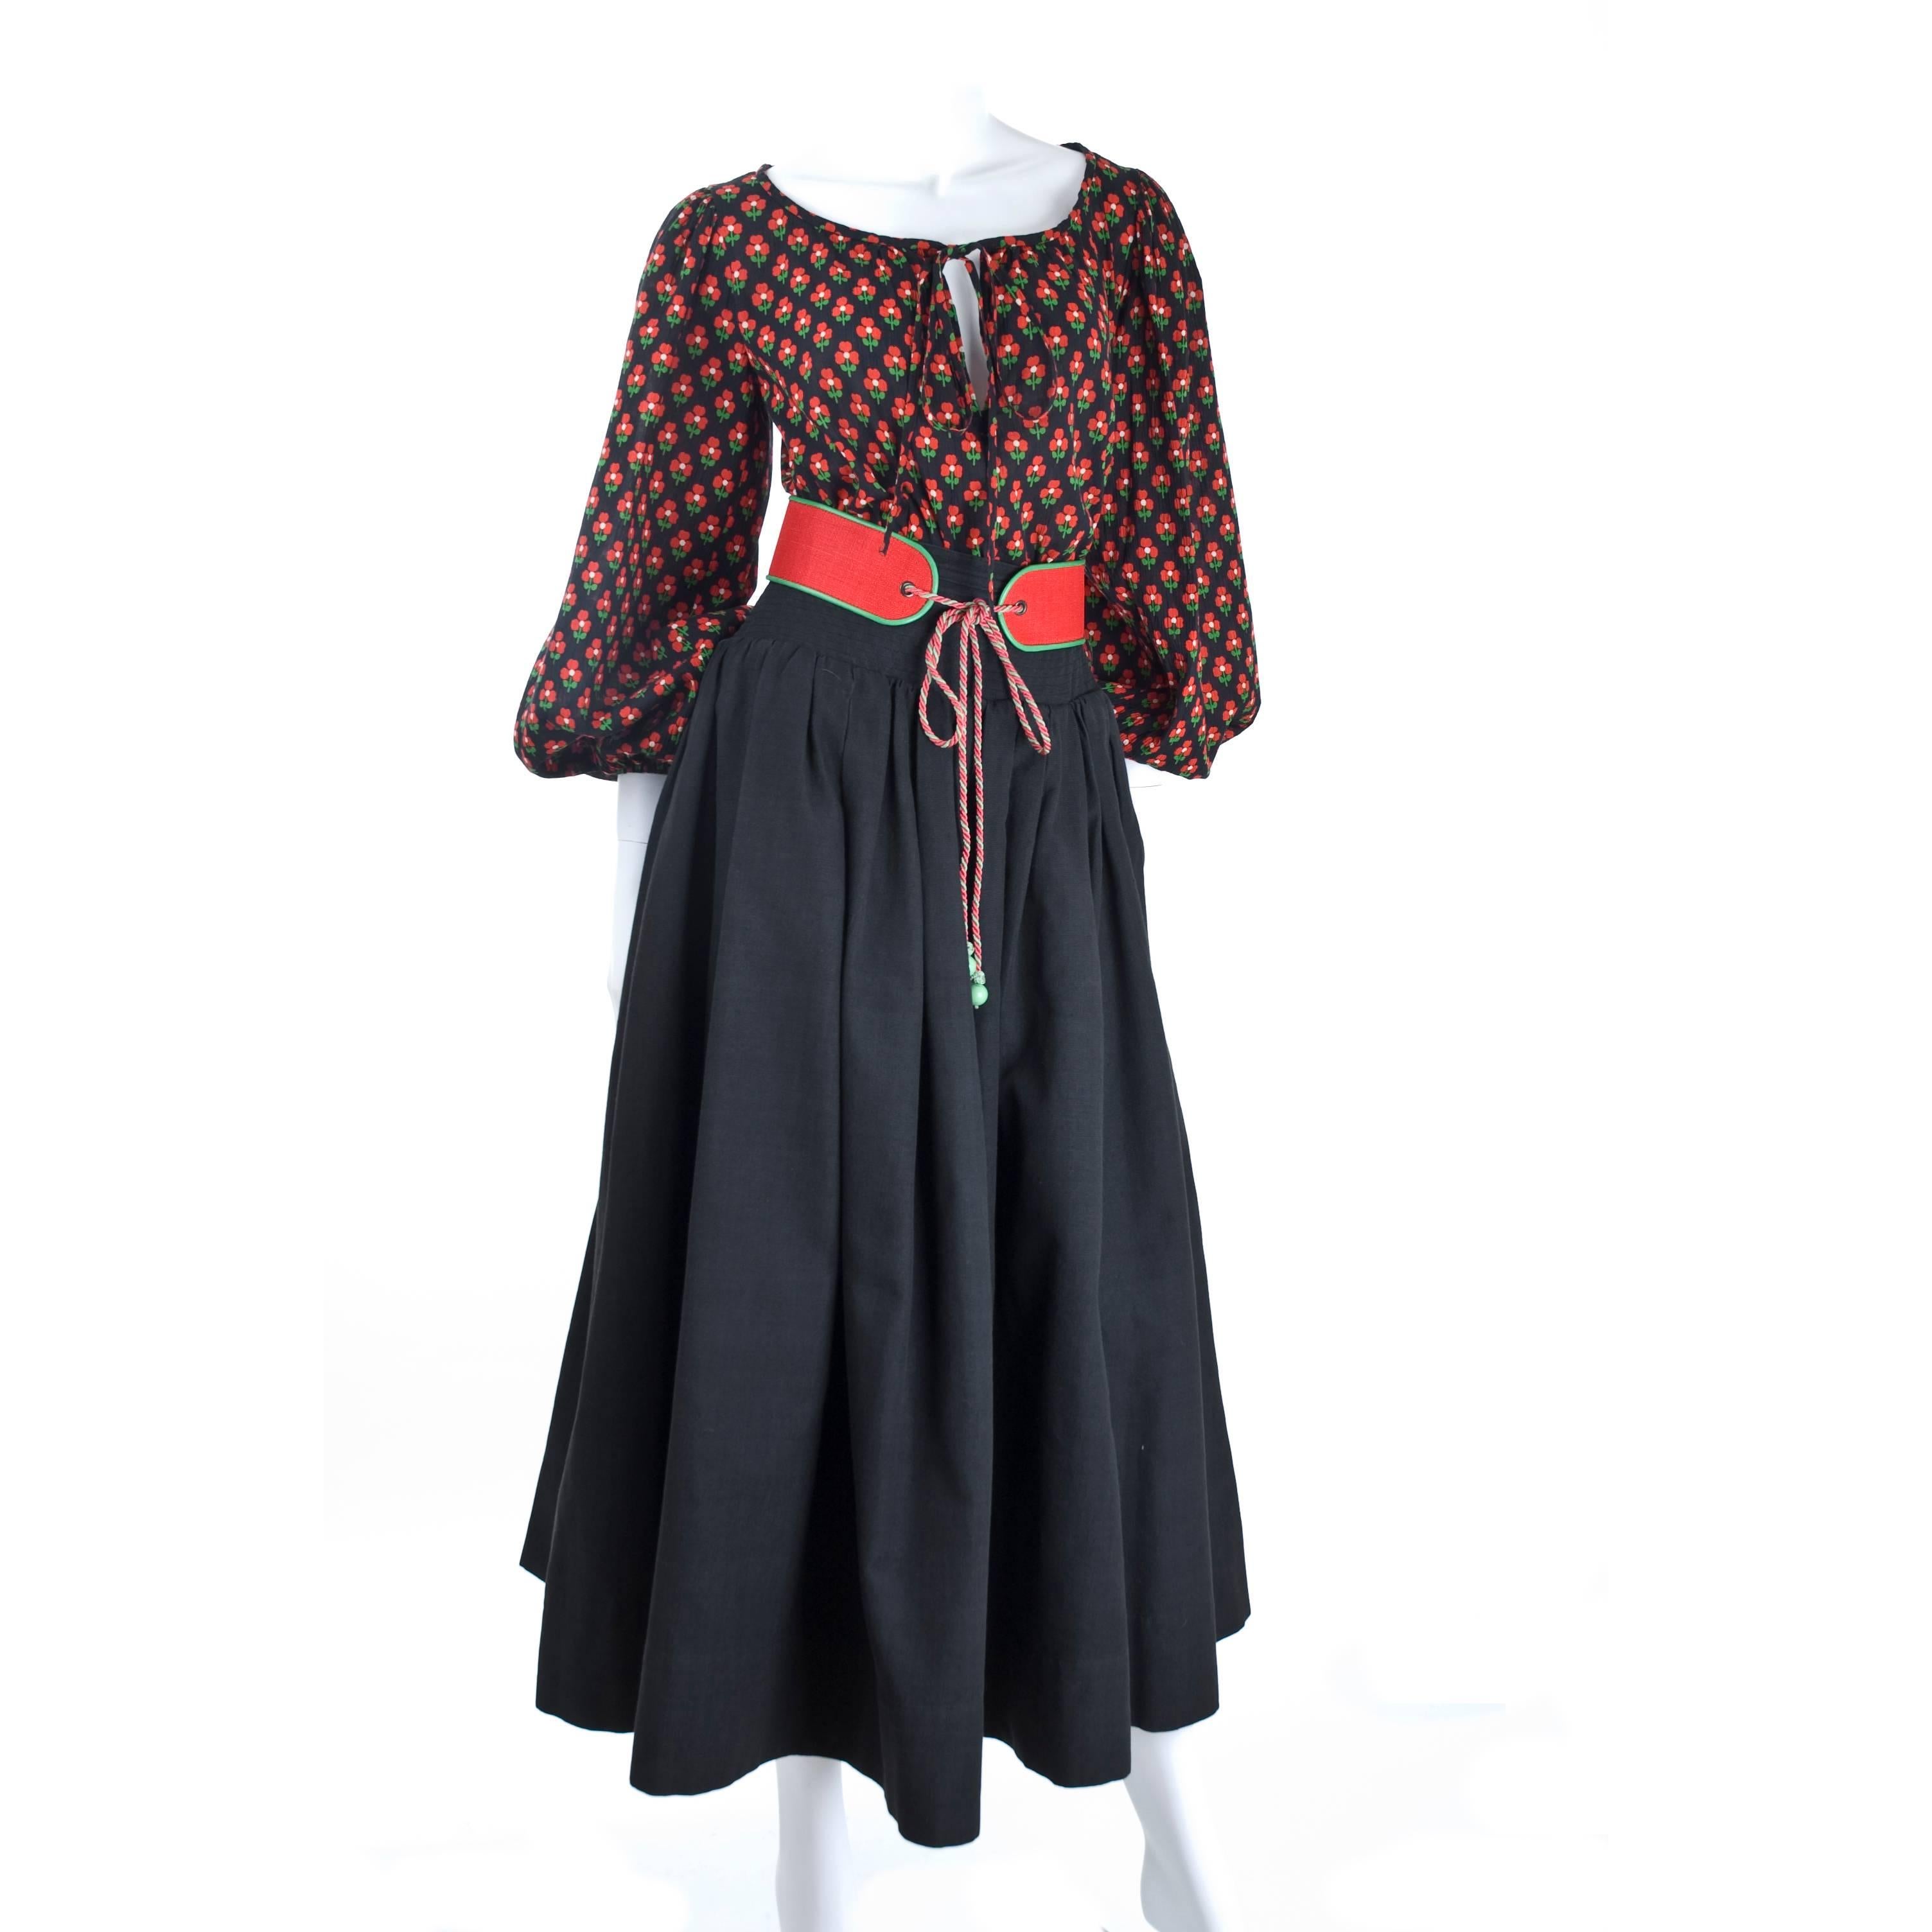  Yves Saint Laurent Vintage Gypsy Skirt Blouse and Belt, 1970s 3